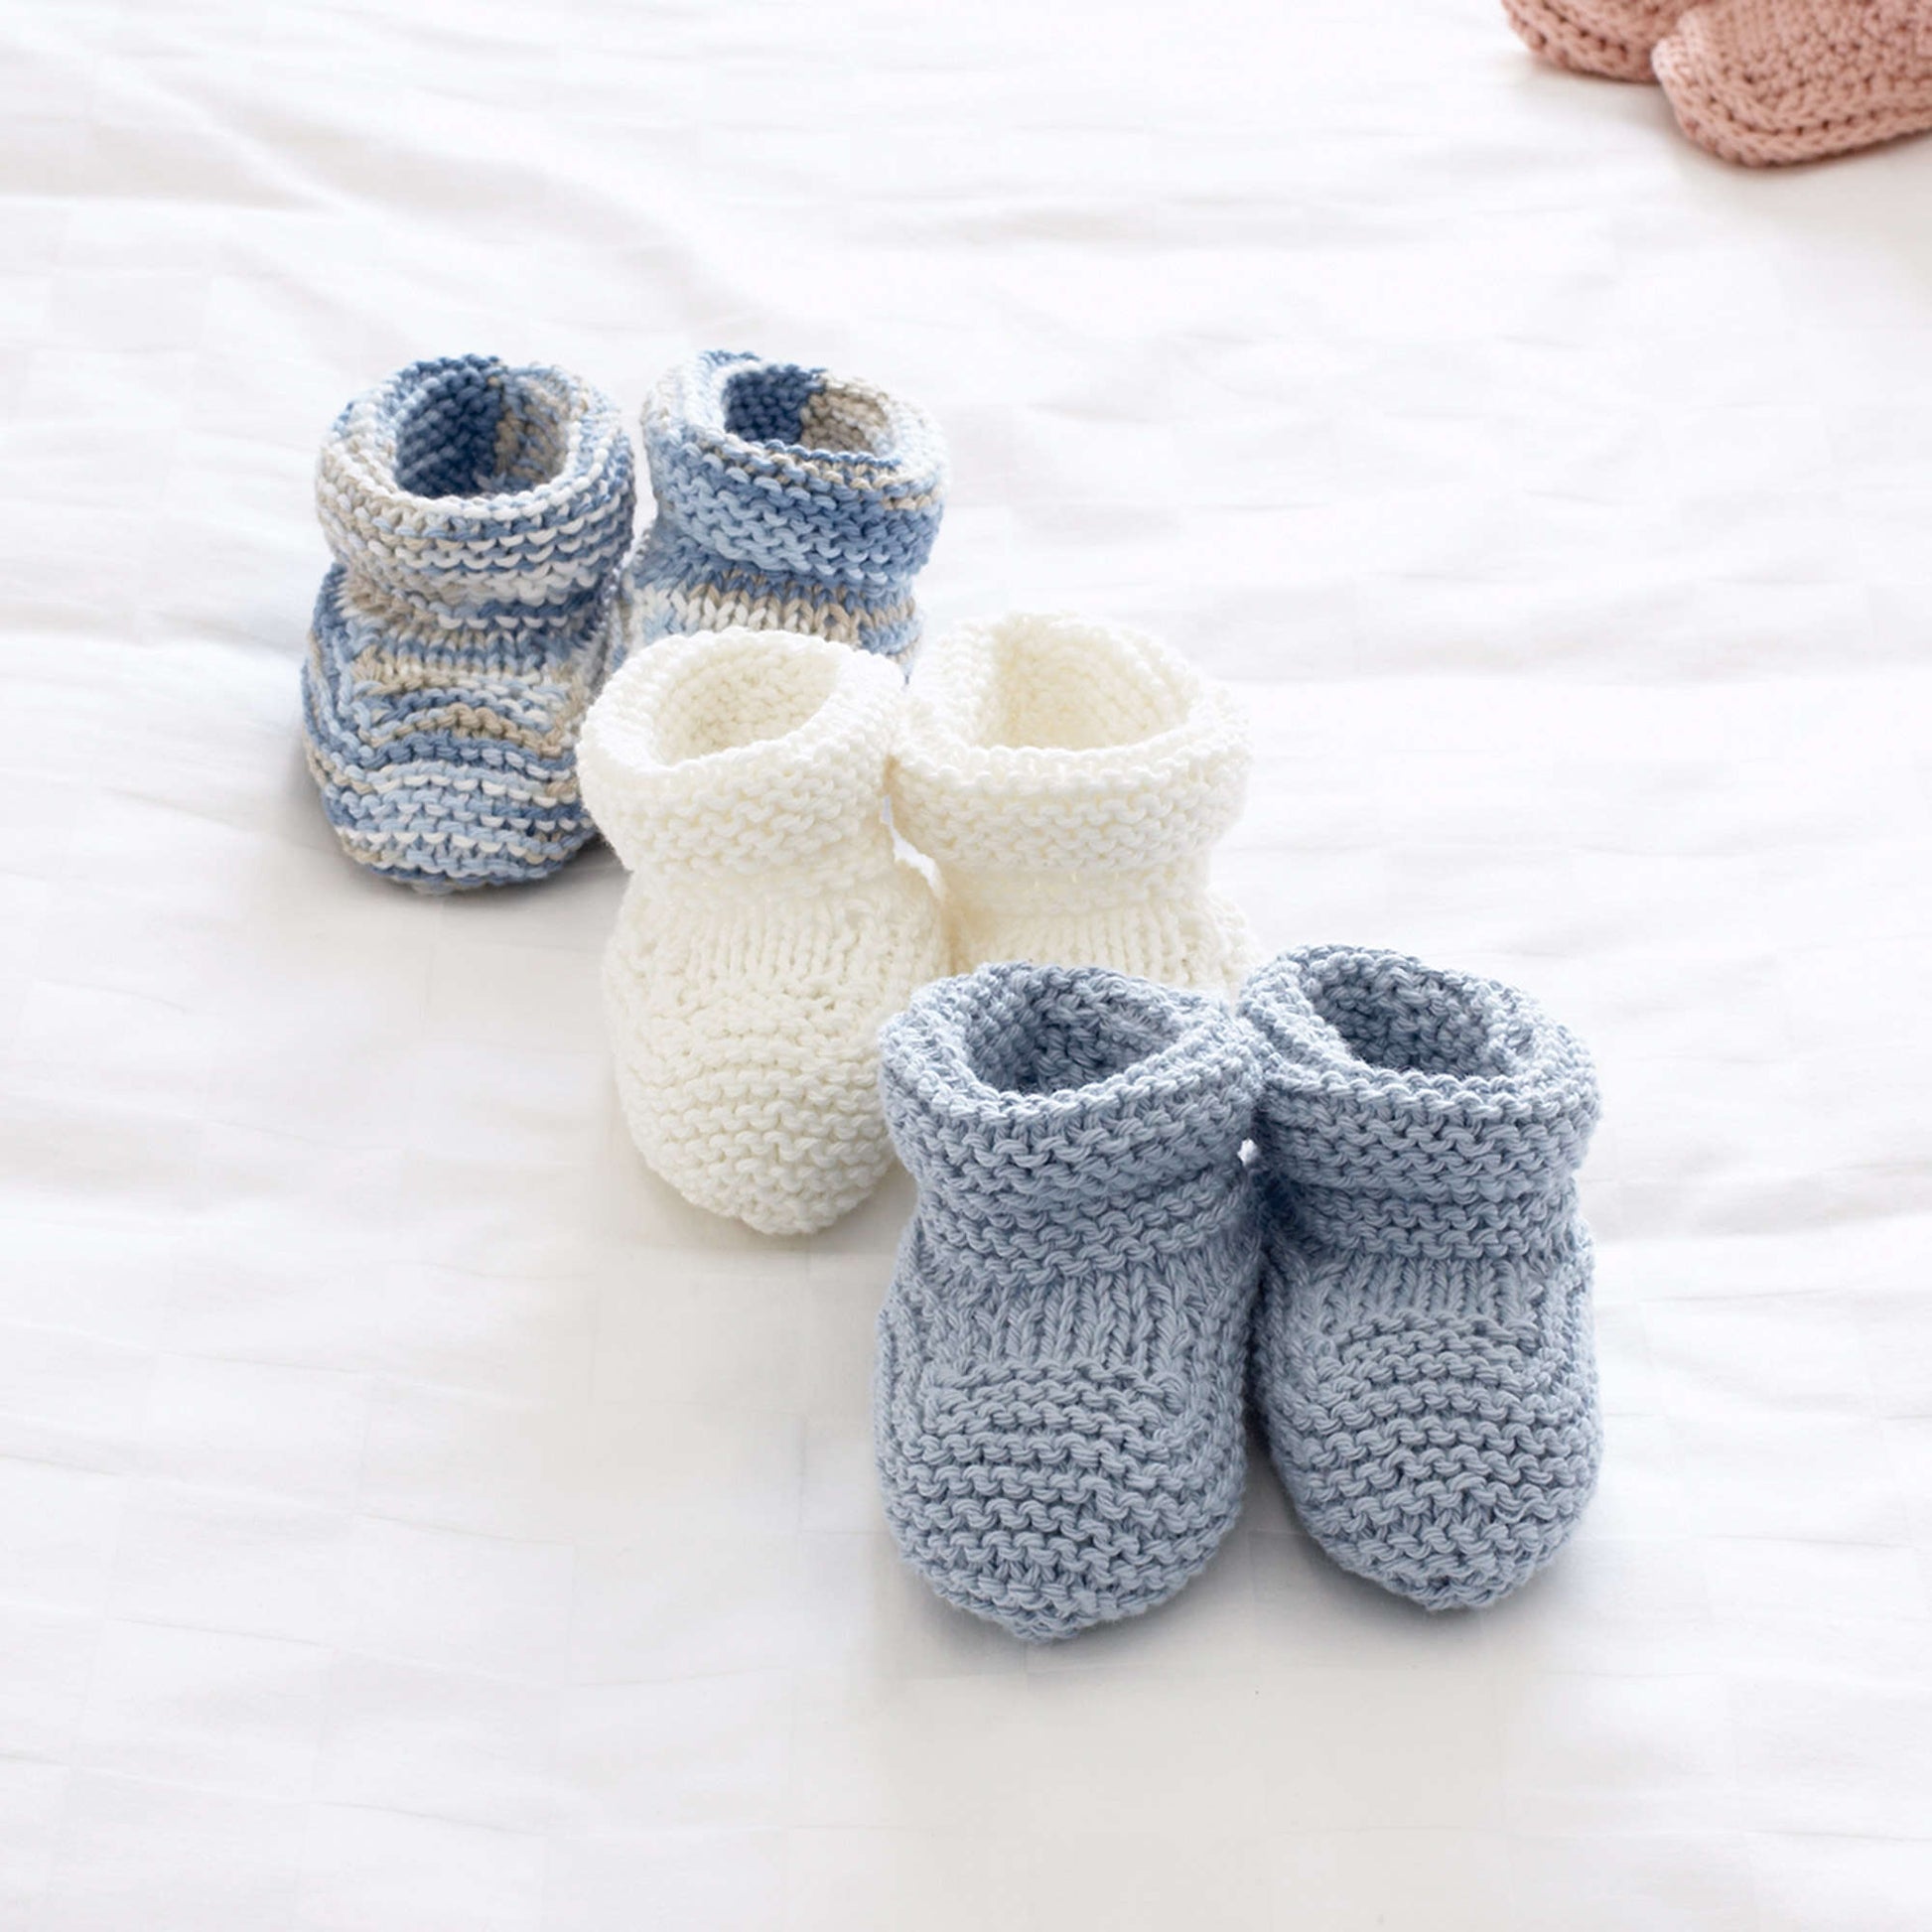 Bernat Blue Baby's Booties Knit Bootie made in Bernat Handicrafter Cotton yarn